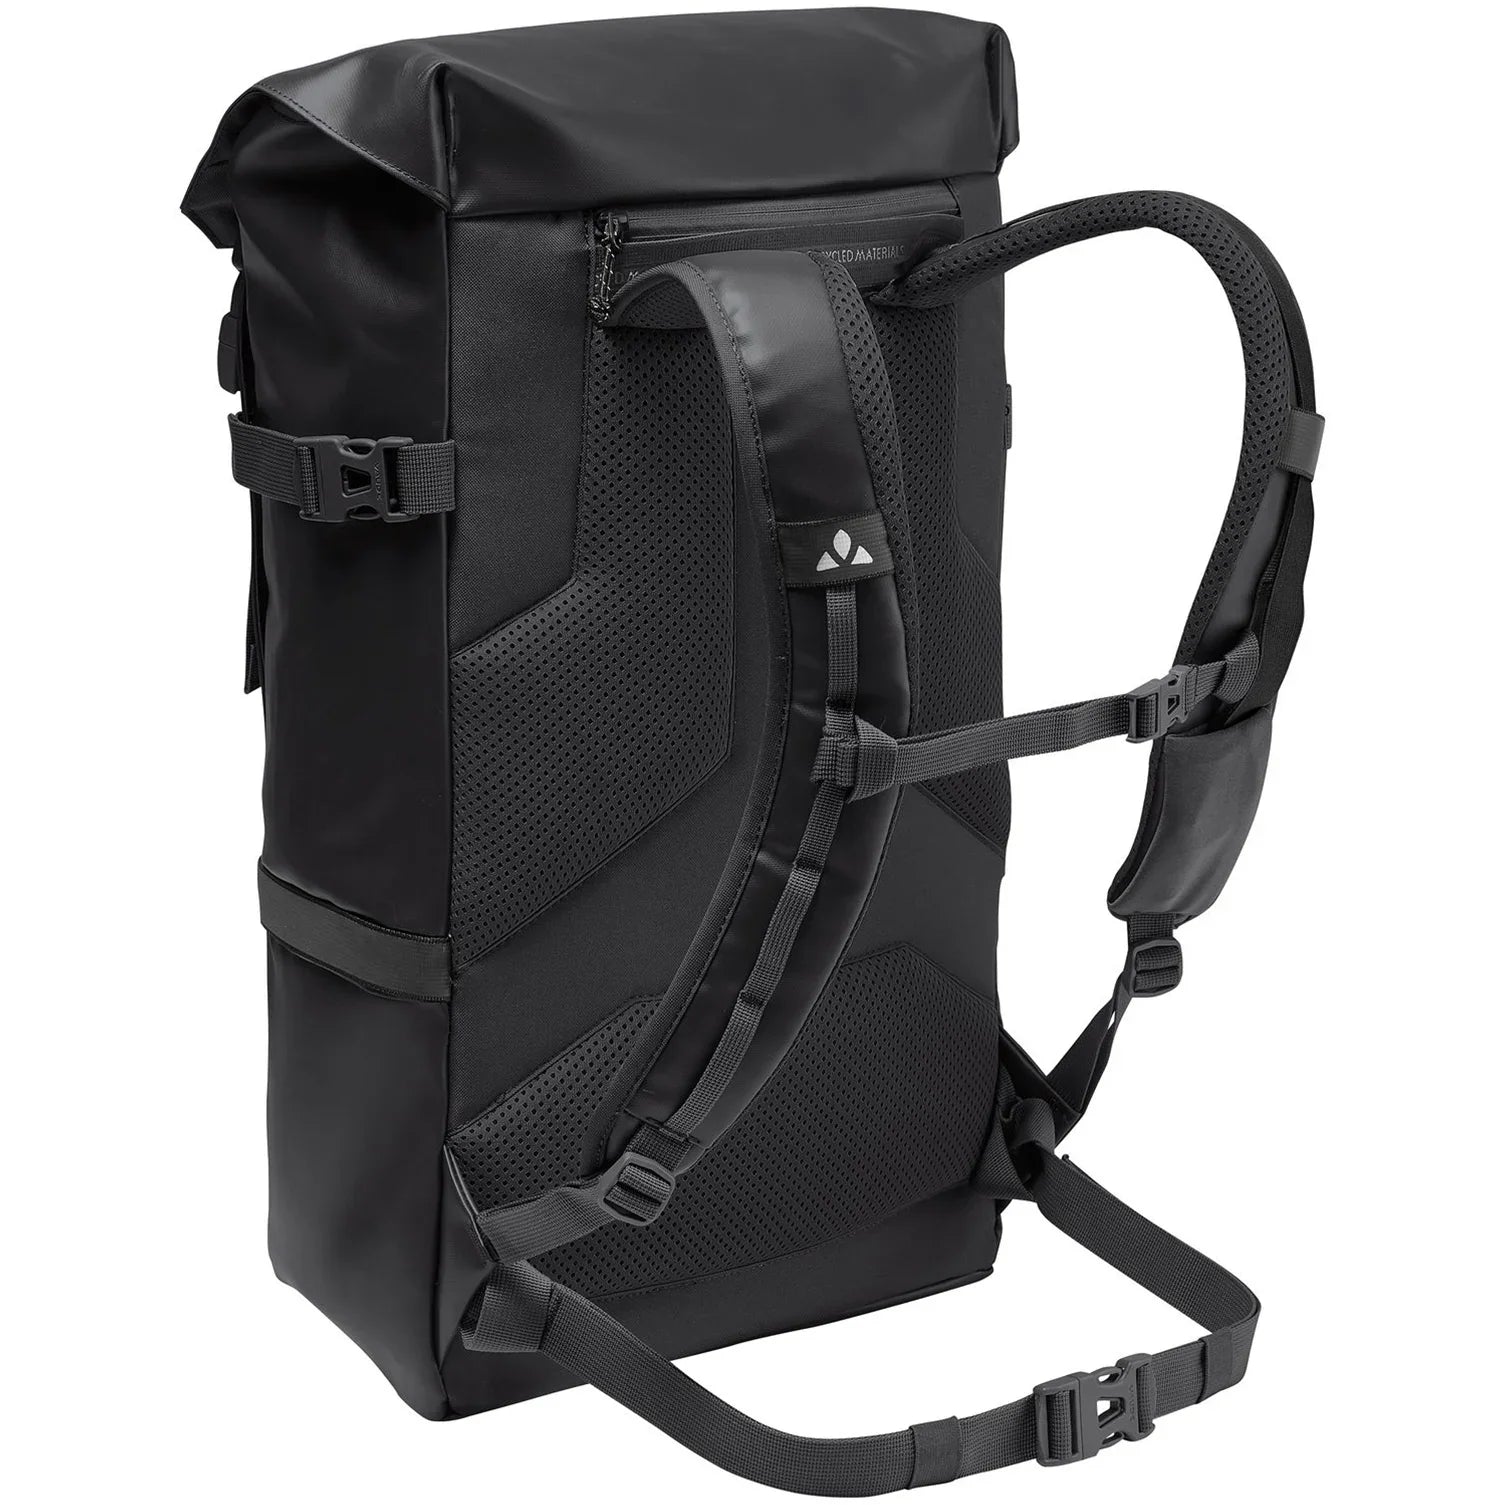 Vaude Mineo Backpack 30 city backpack 48 cm - Black